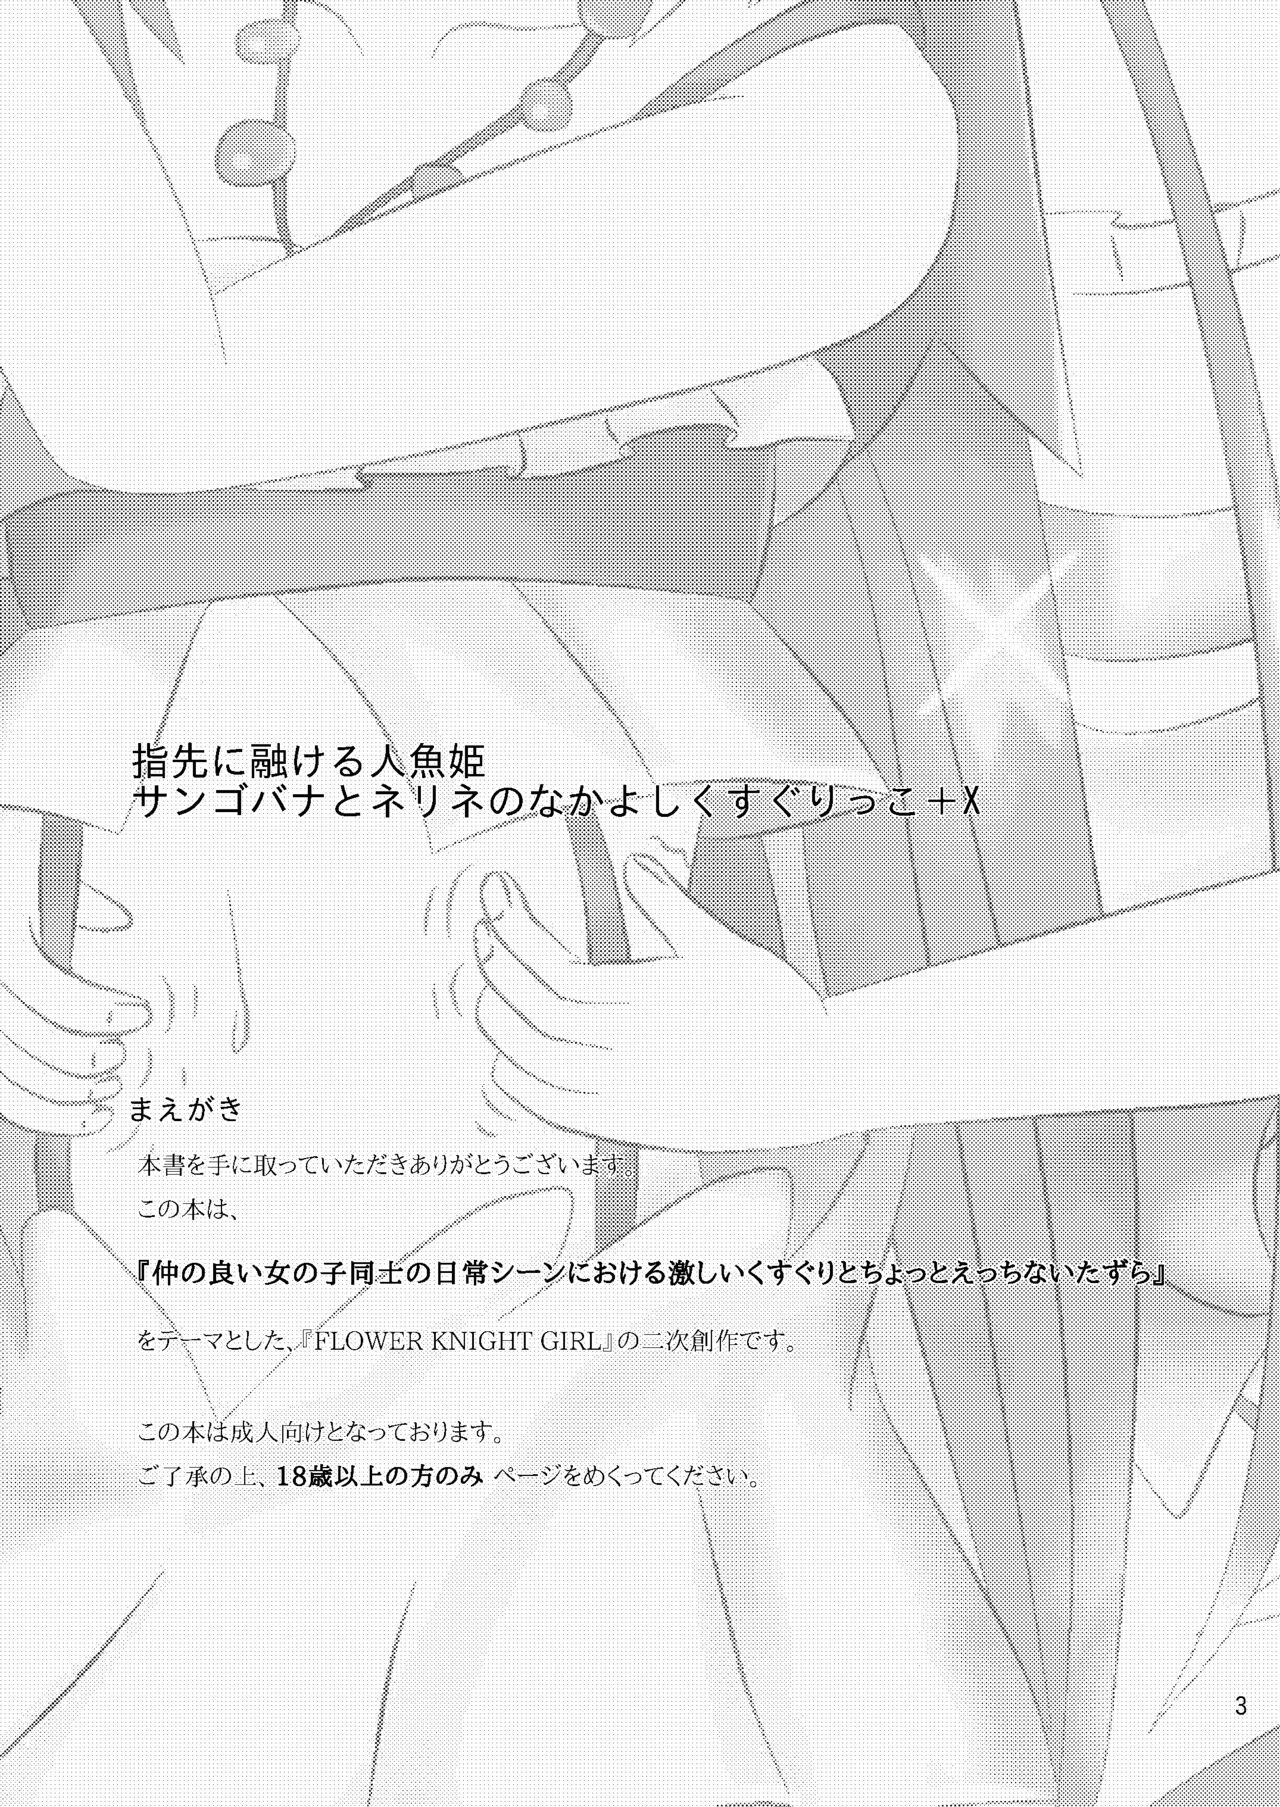 Argenta Yubisaki ni Tokeru Ningyohime - Sangobana to Nerine no Nakayoshi Kusugurikko + X - Flower knight girl Clothed - Page 3